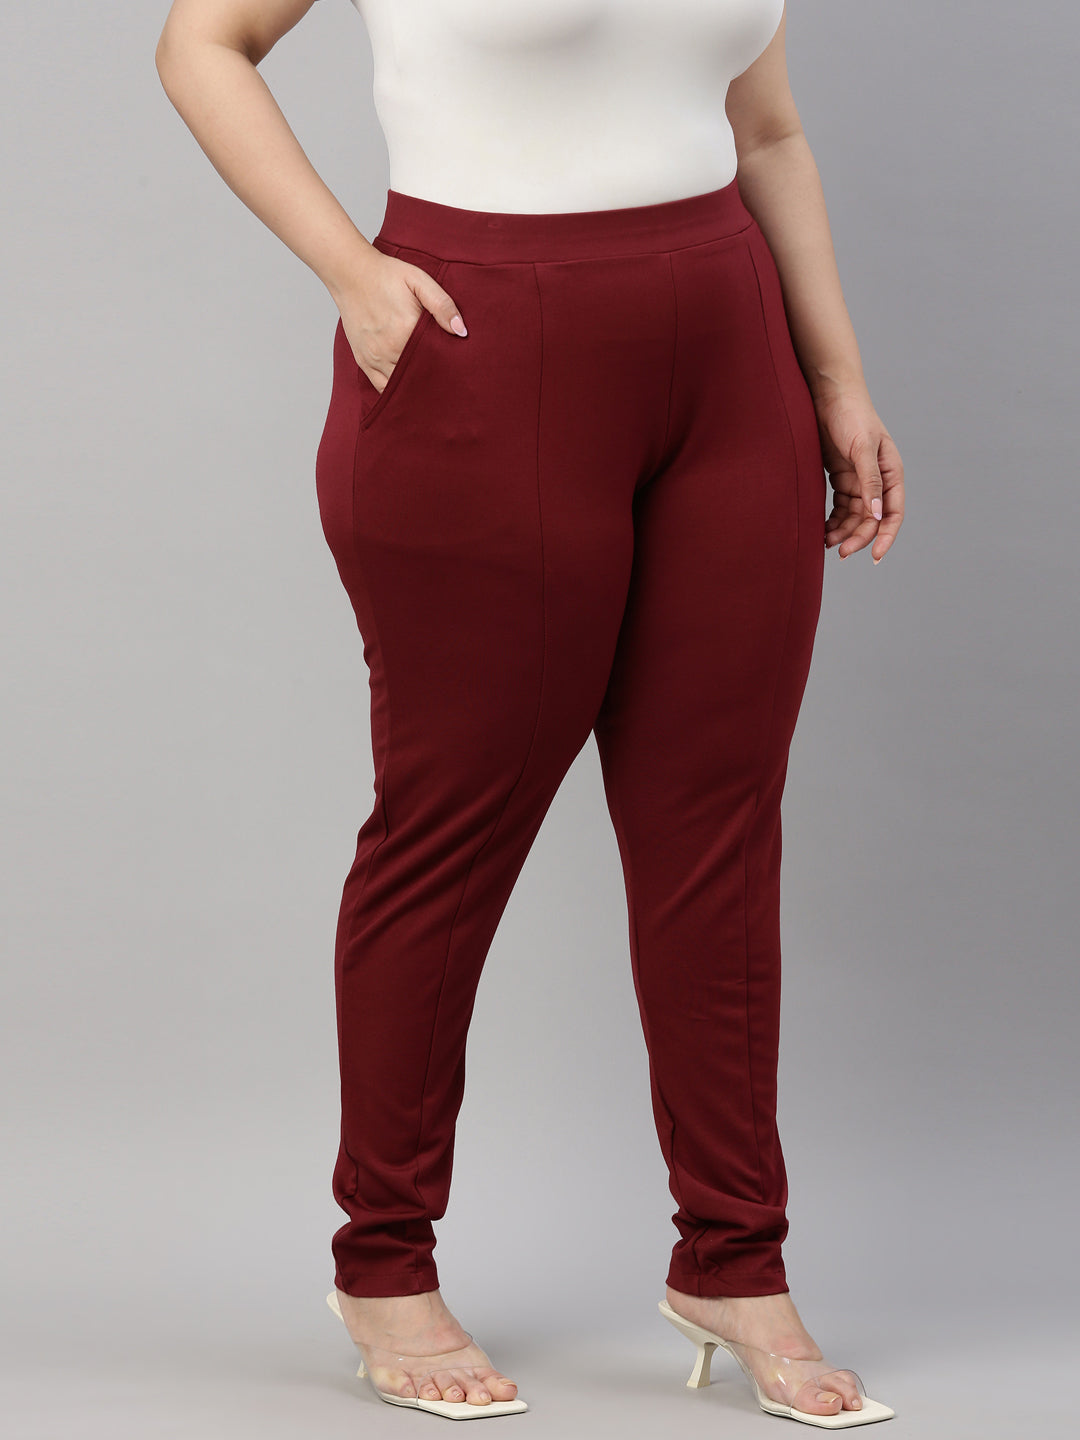 Shop Women's Solid Maroon Stretch Ponte Pants Online